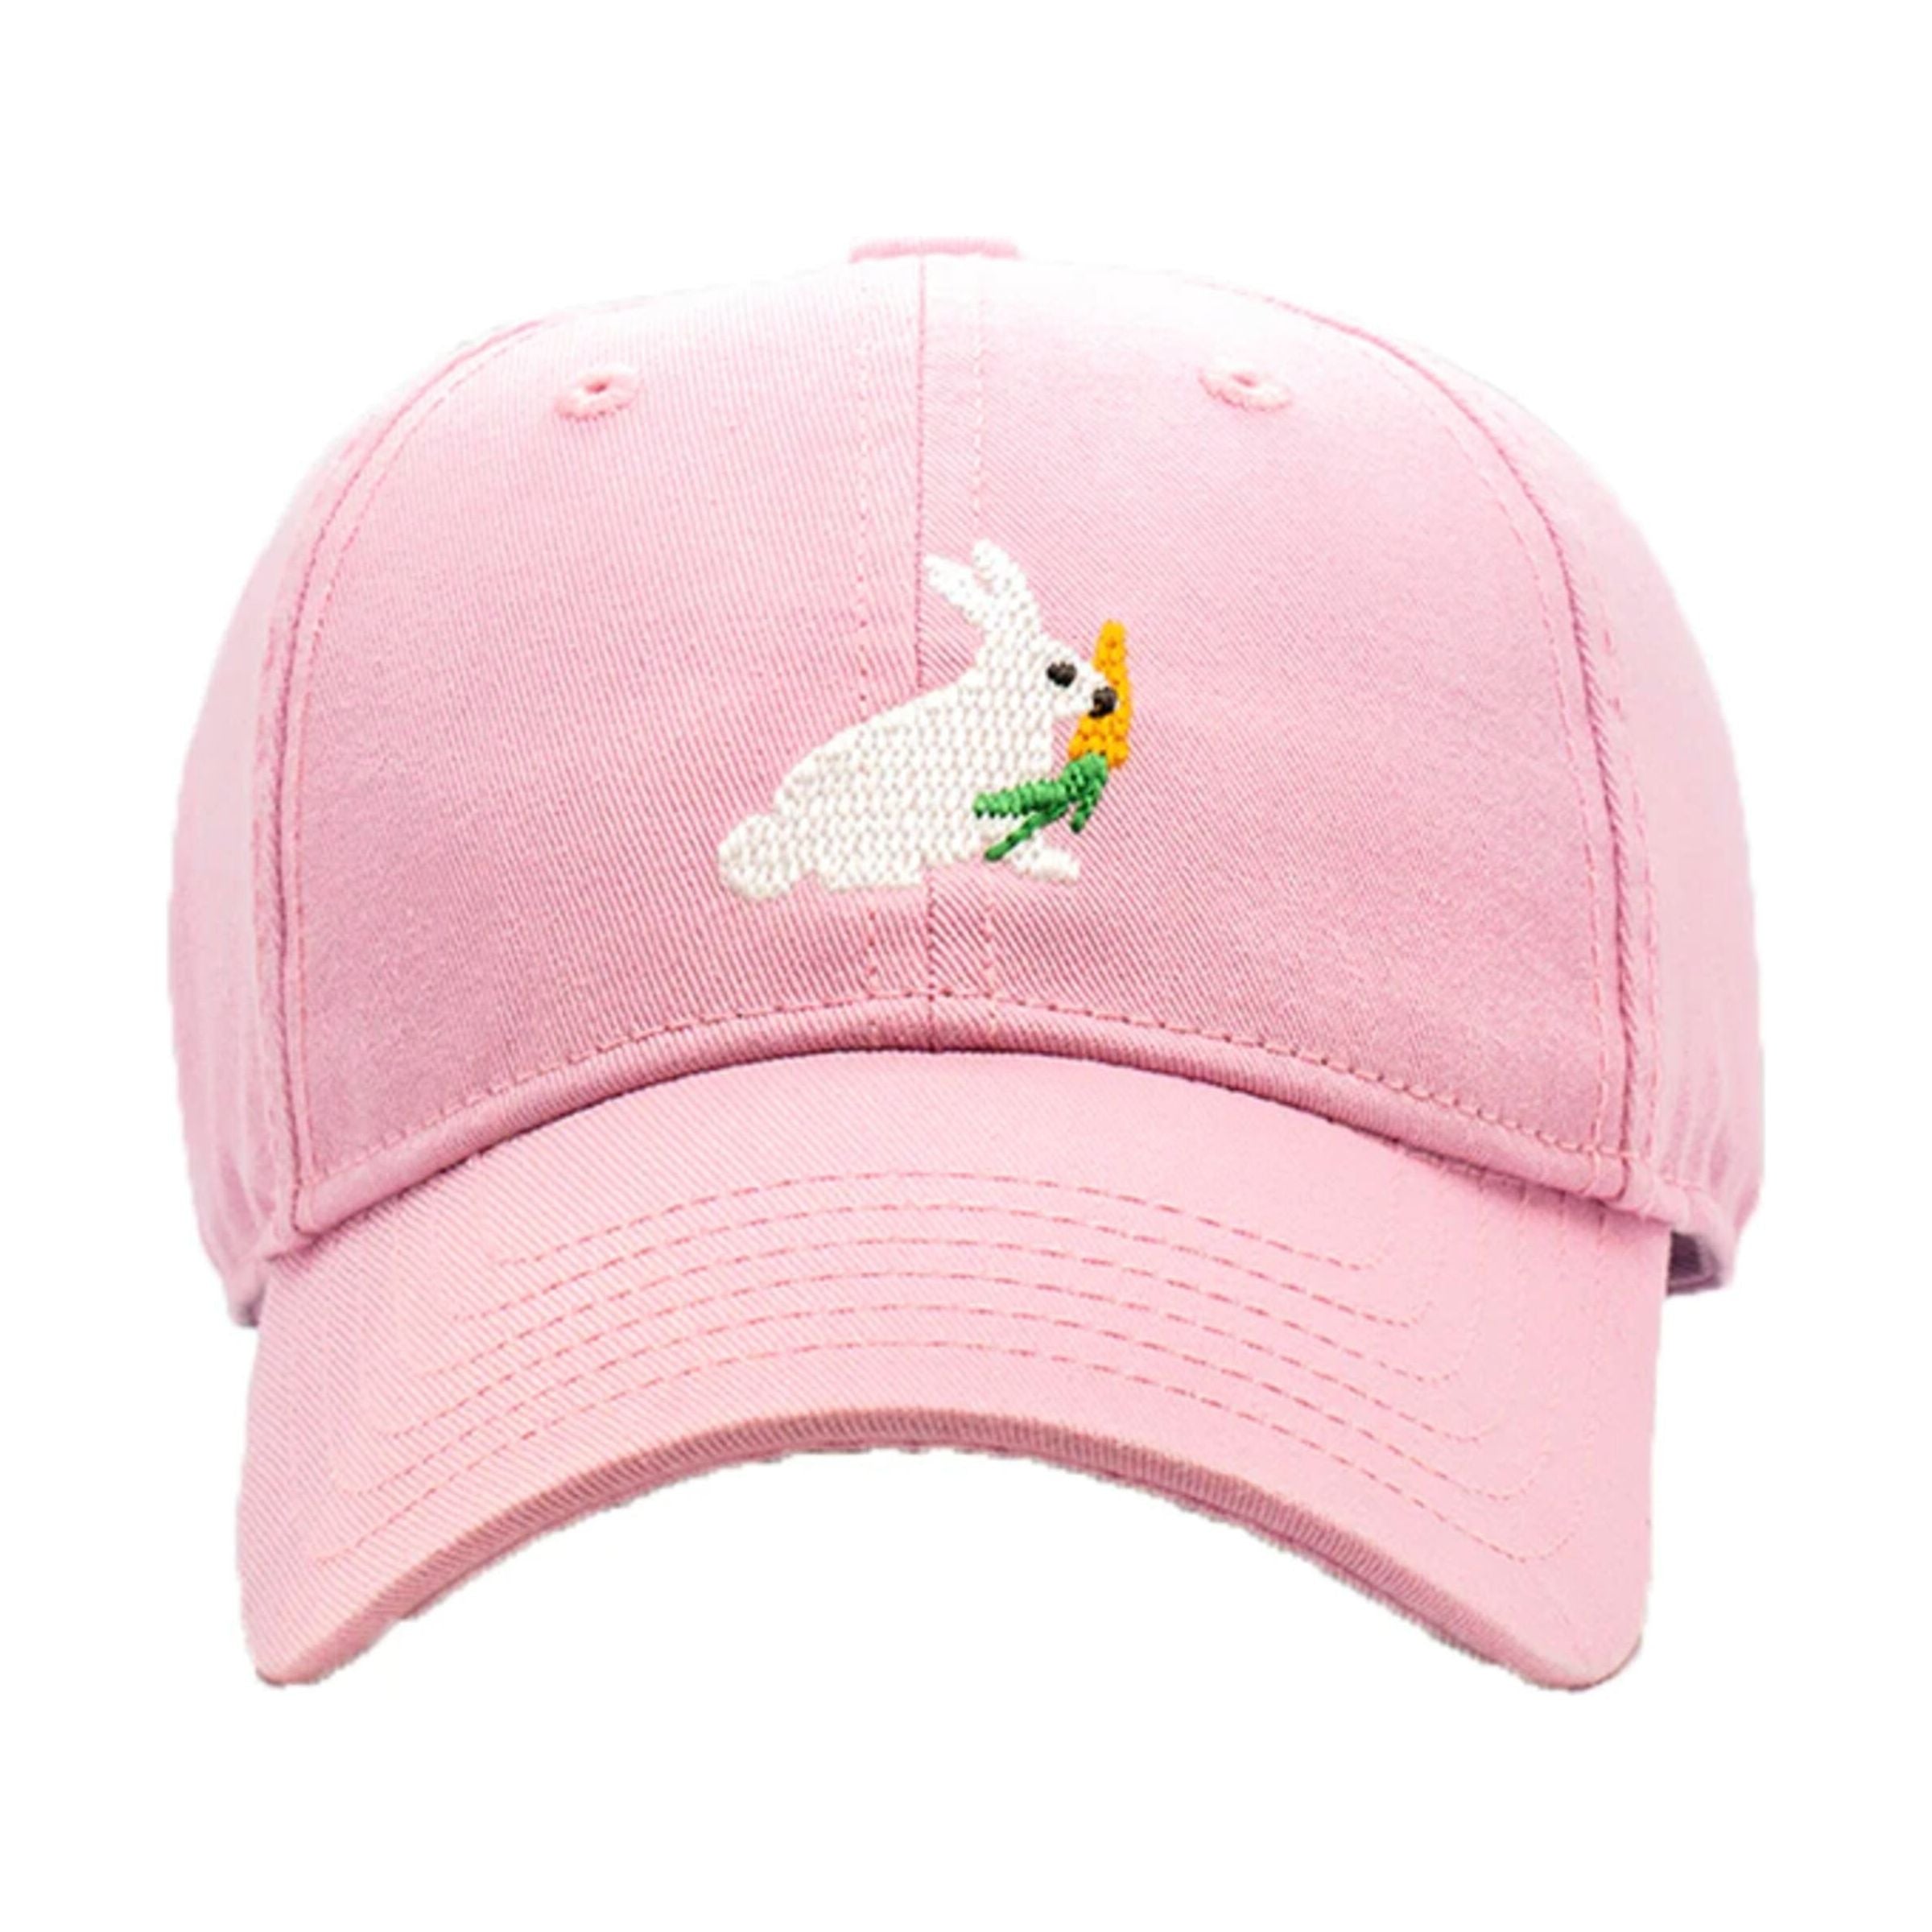 Baseball Hat - Bunny Carrot on Pink